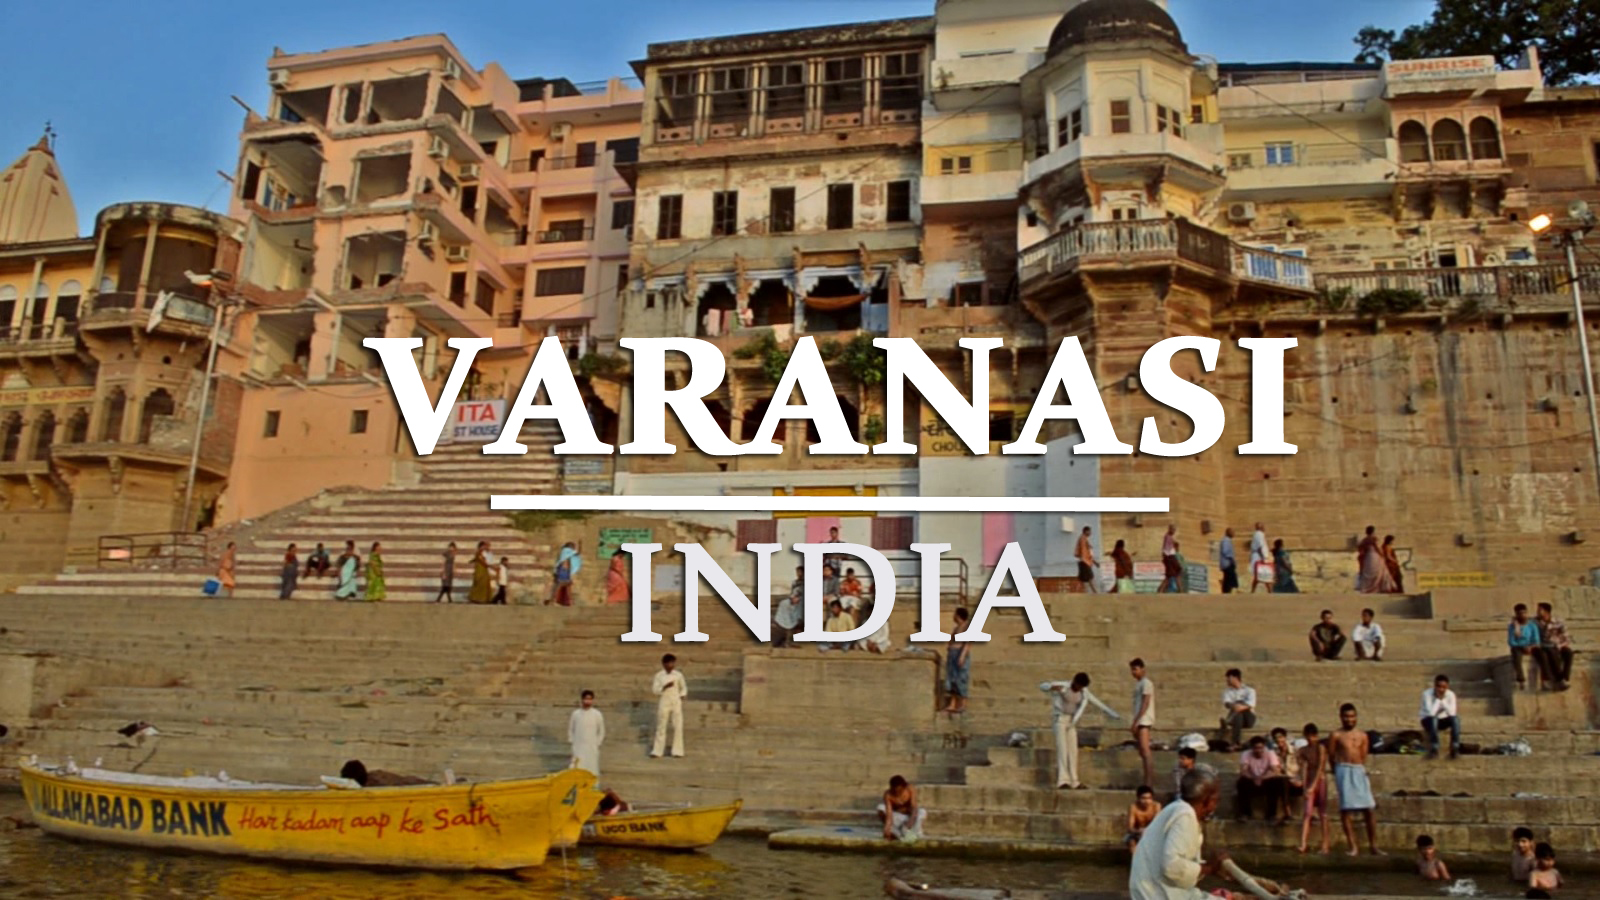 Travel Guide To India (Part 3): Varanasi